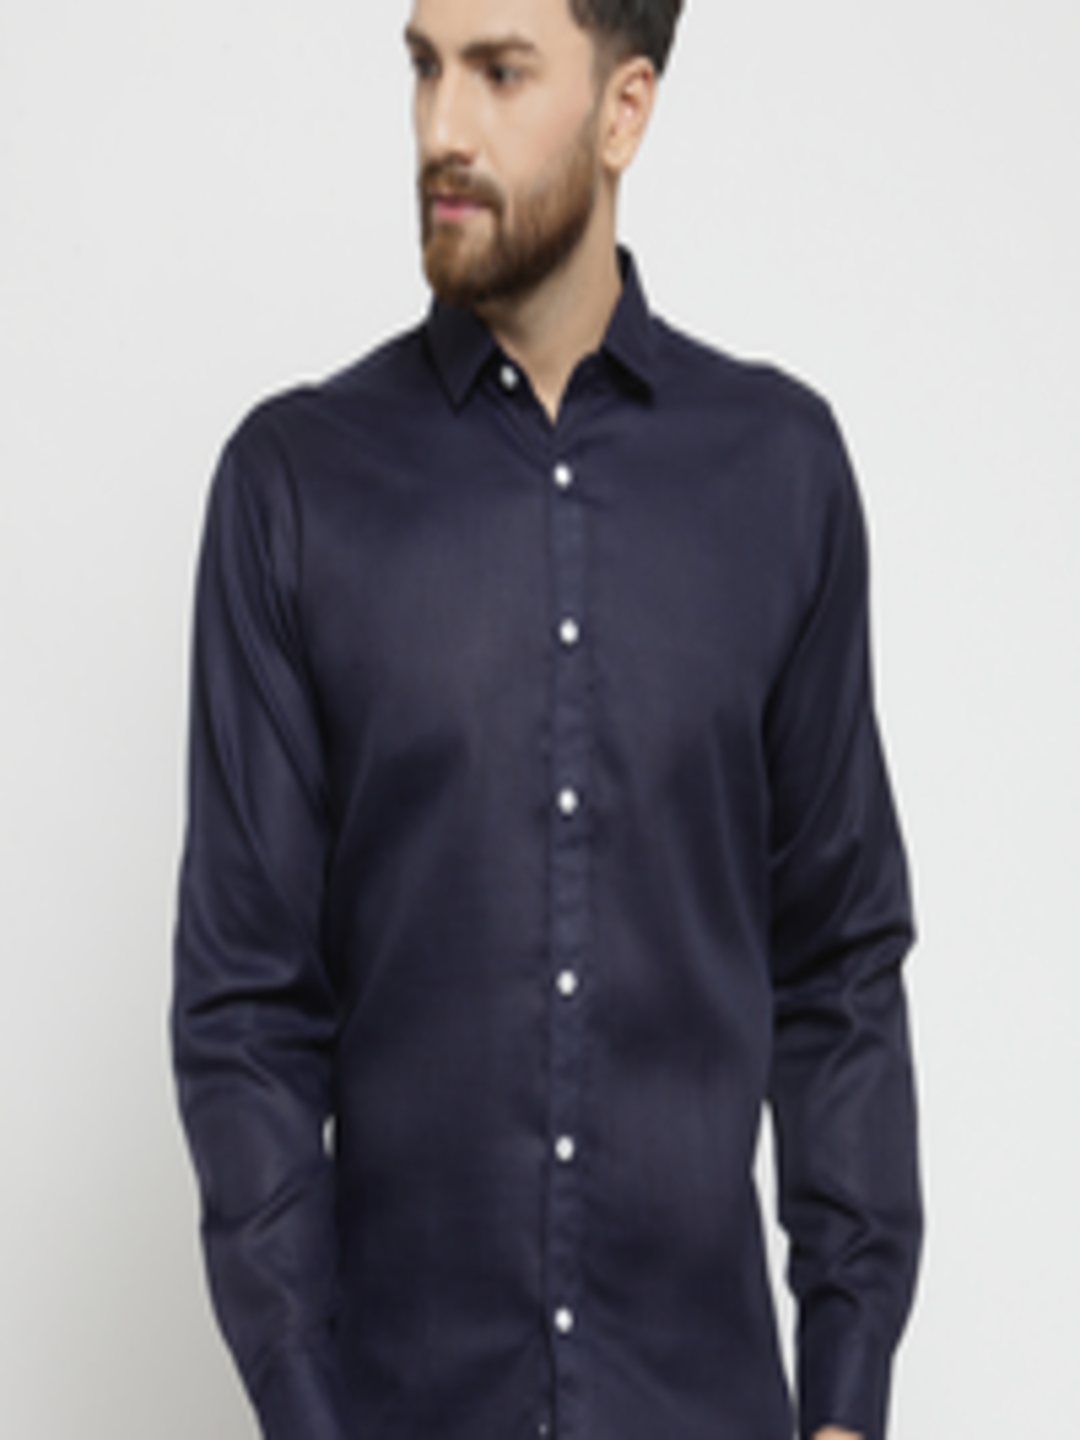 Buy JAINISH Men Navy Blue Classic Regular Fit Solid Casual Shirt ...